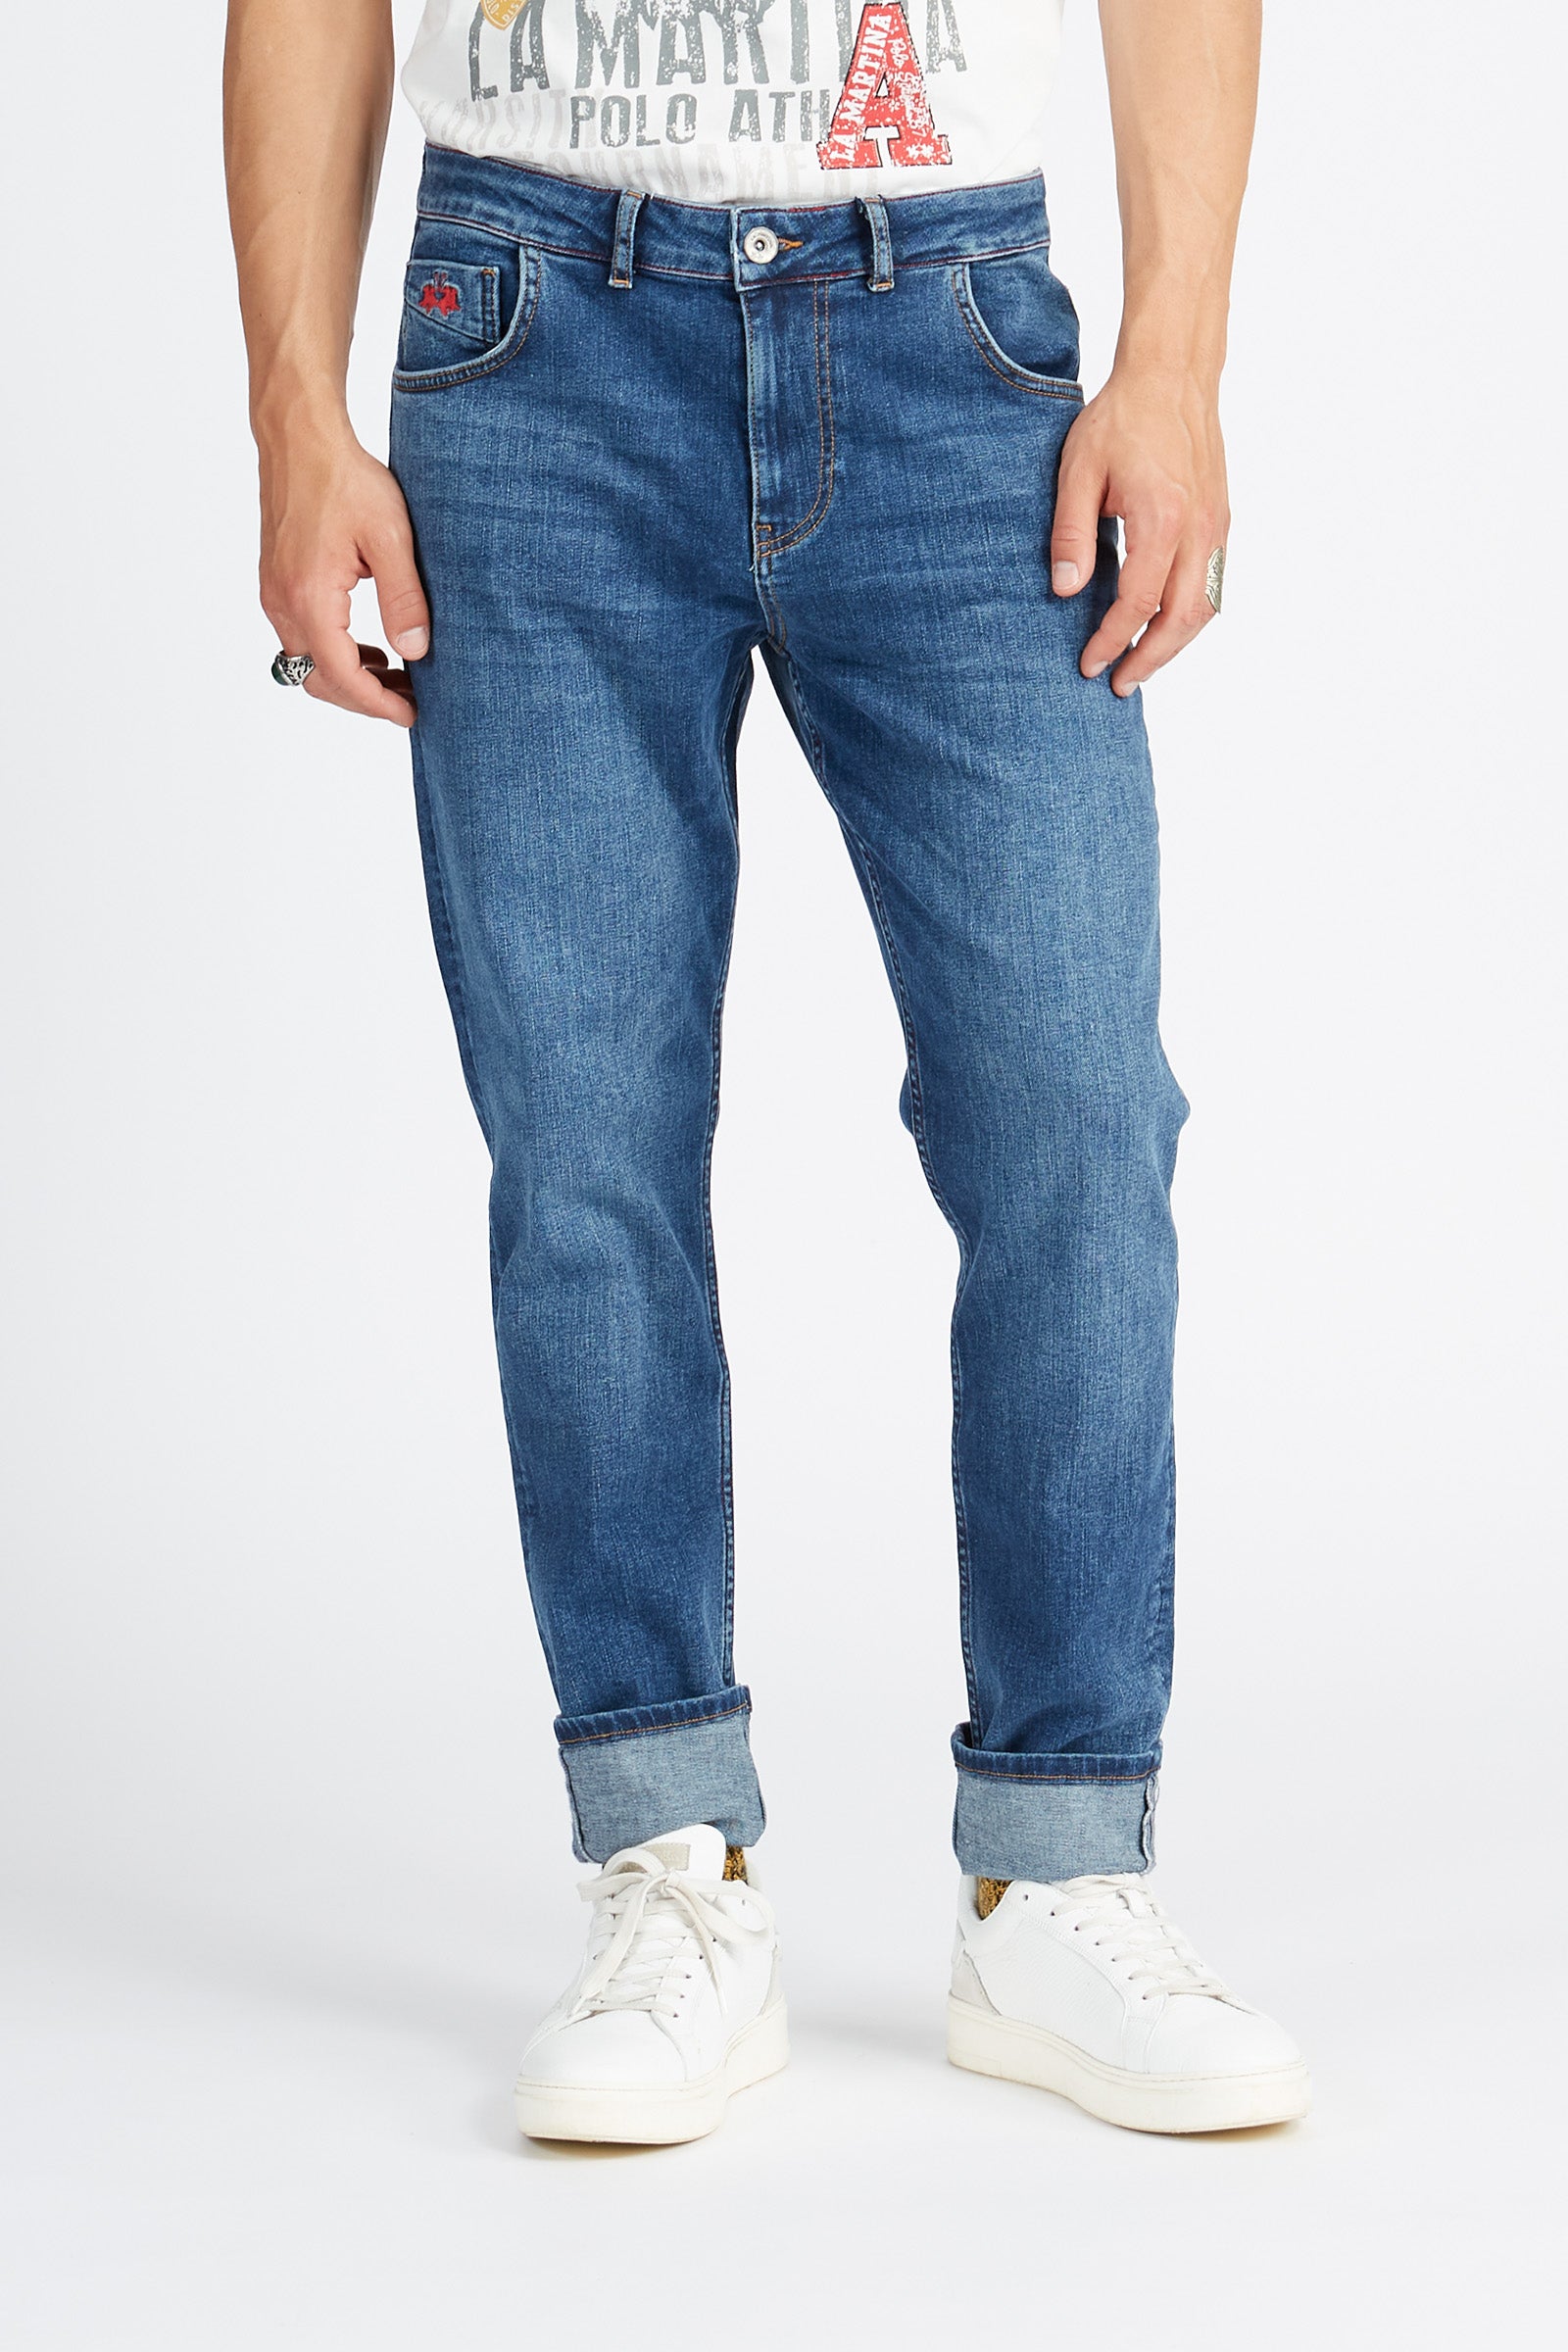 Pantalone jeans denim uomo 5 tasche Polo Academy - Vidal - Dark Indigo Denim